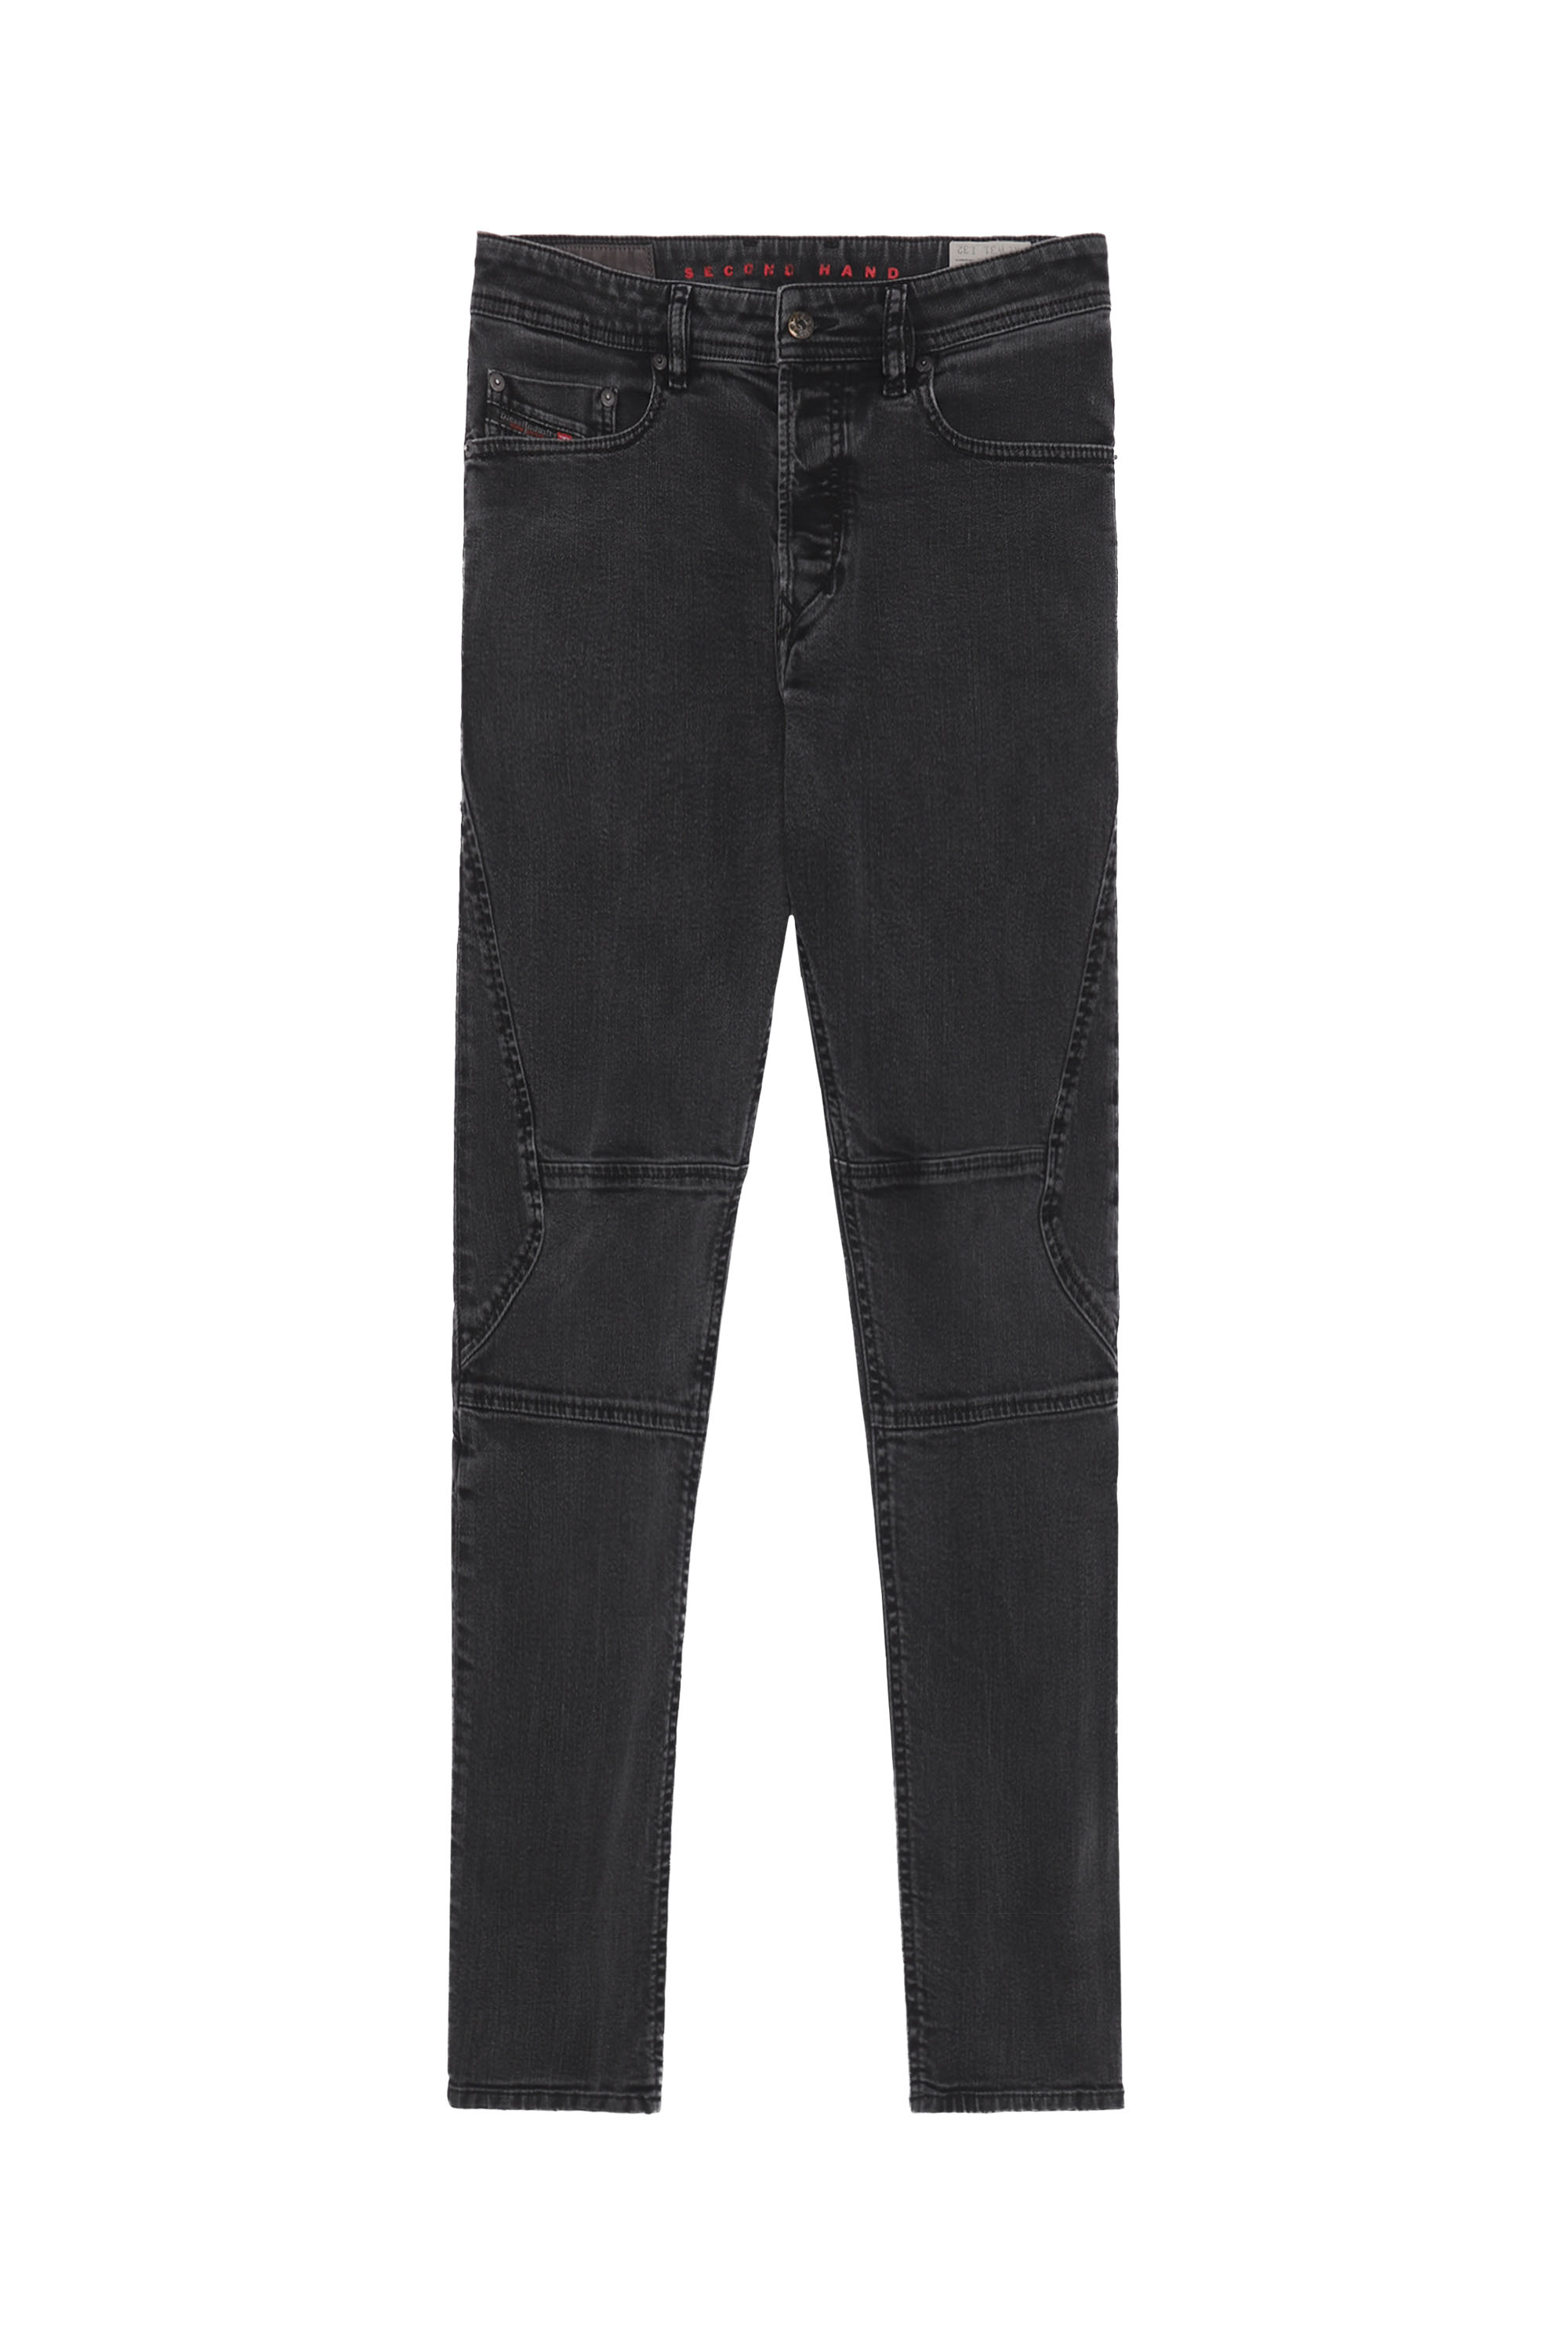 T-RIDE, Schwarz/Dunkelgrau - Jeans